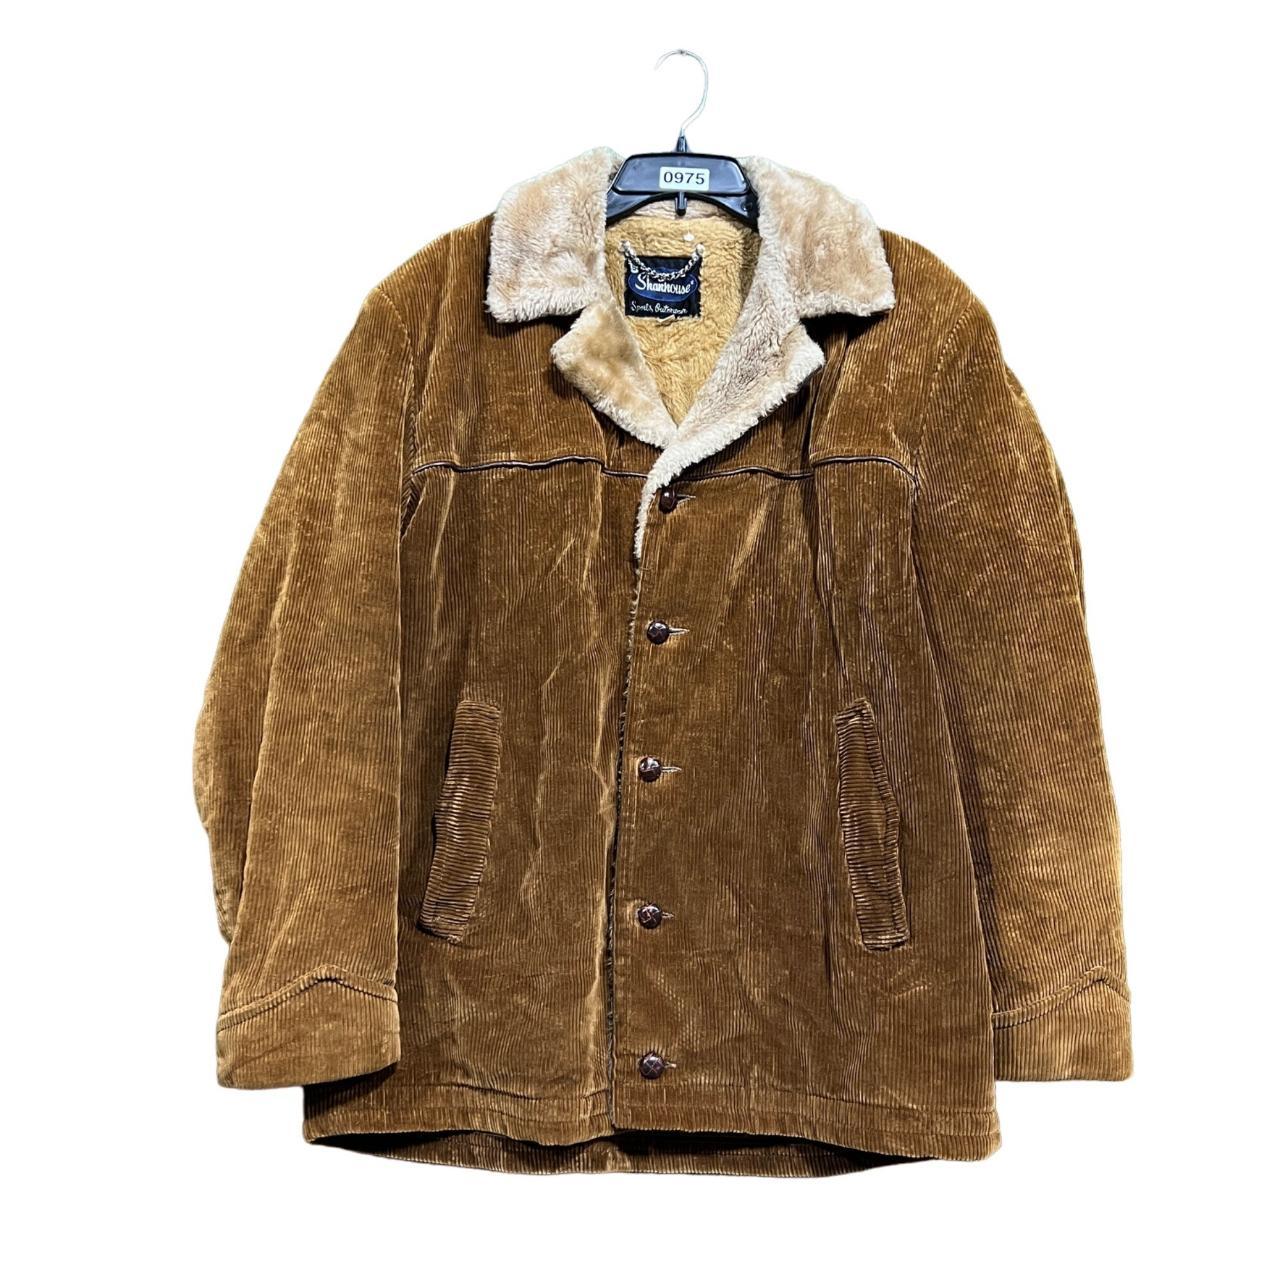 vintage shanhouse corduroy jacket size 42 Size:... - Depop